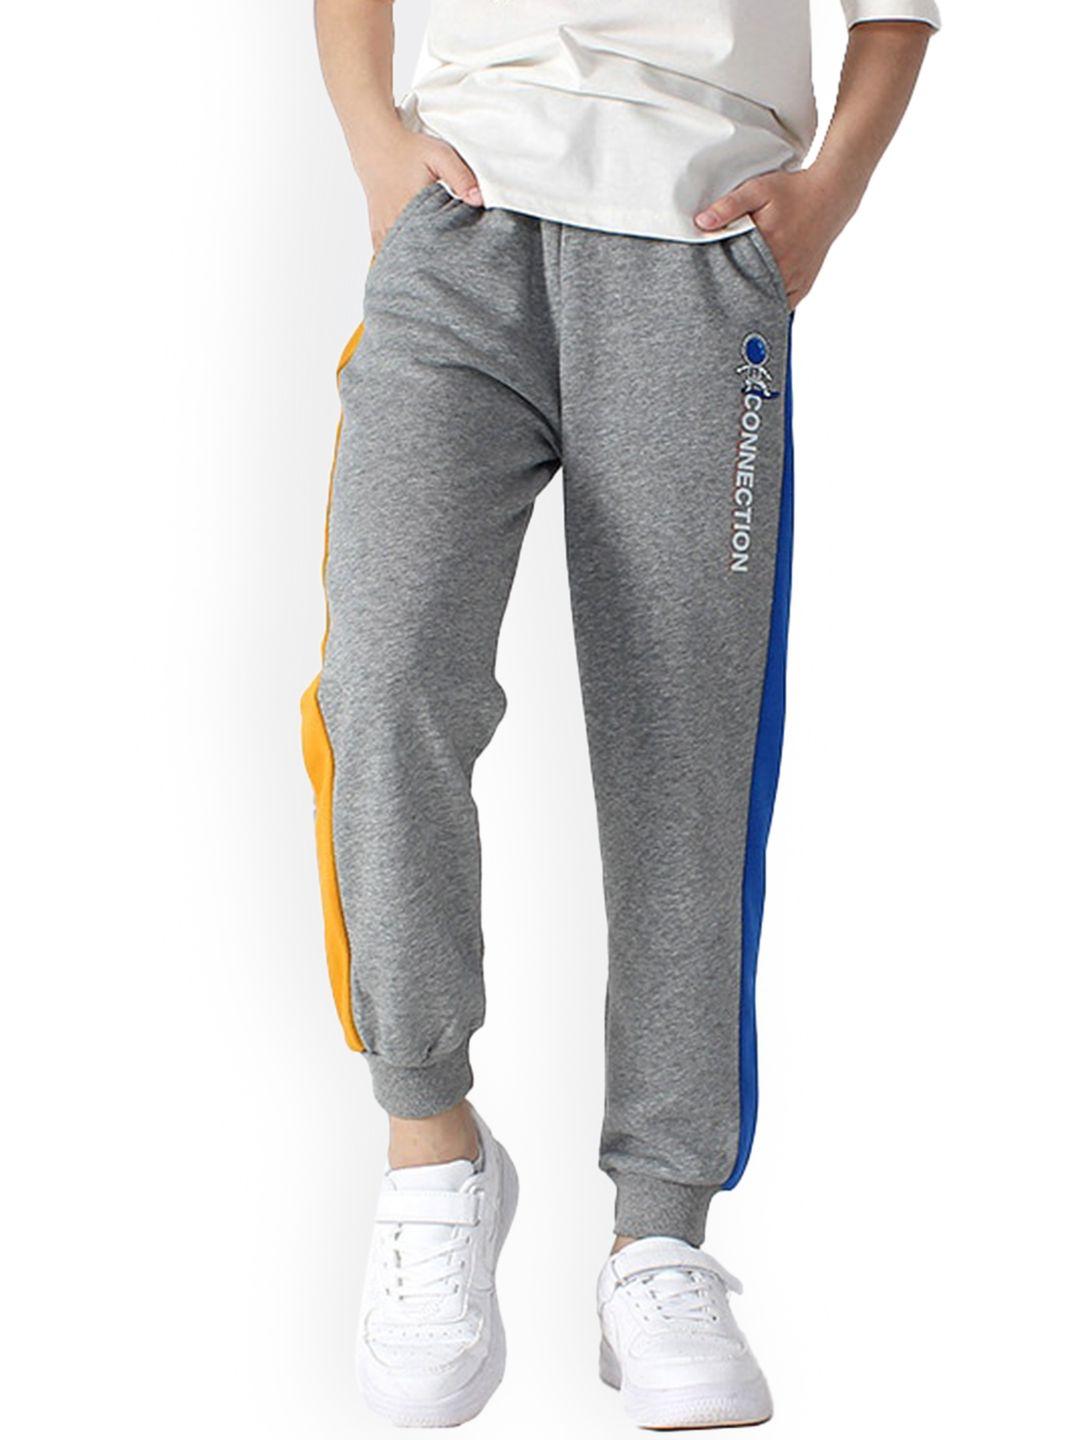 stylecast boys grey colourblocked easy wash cotton joggers trouser